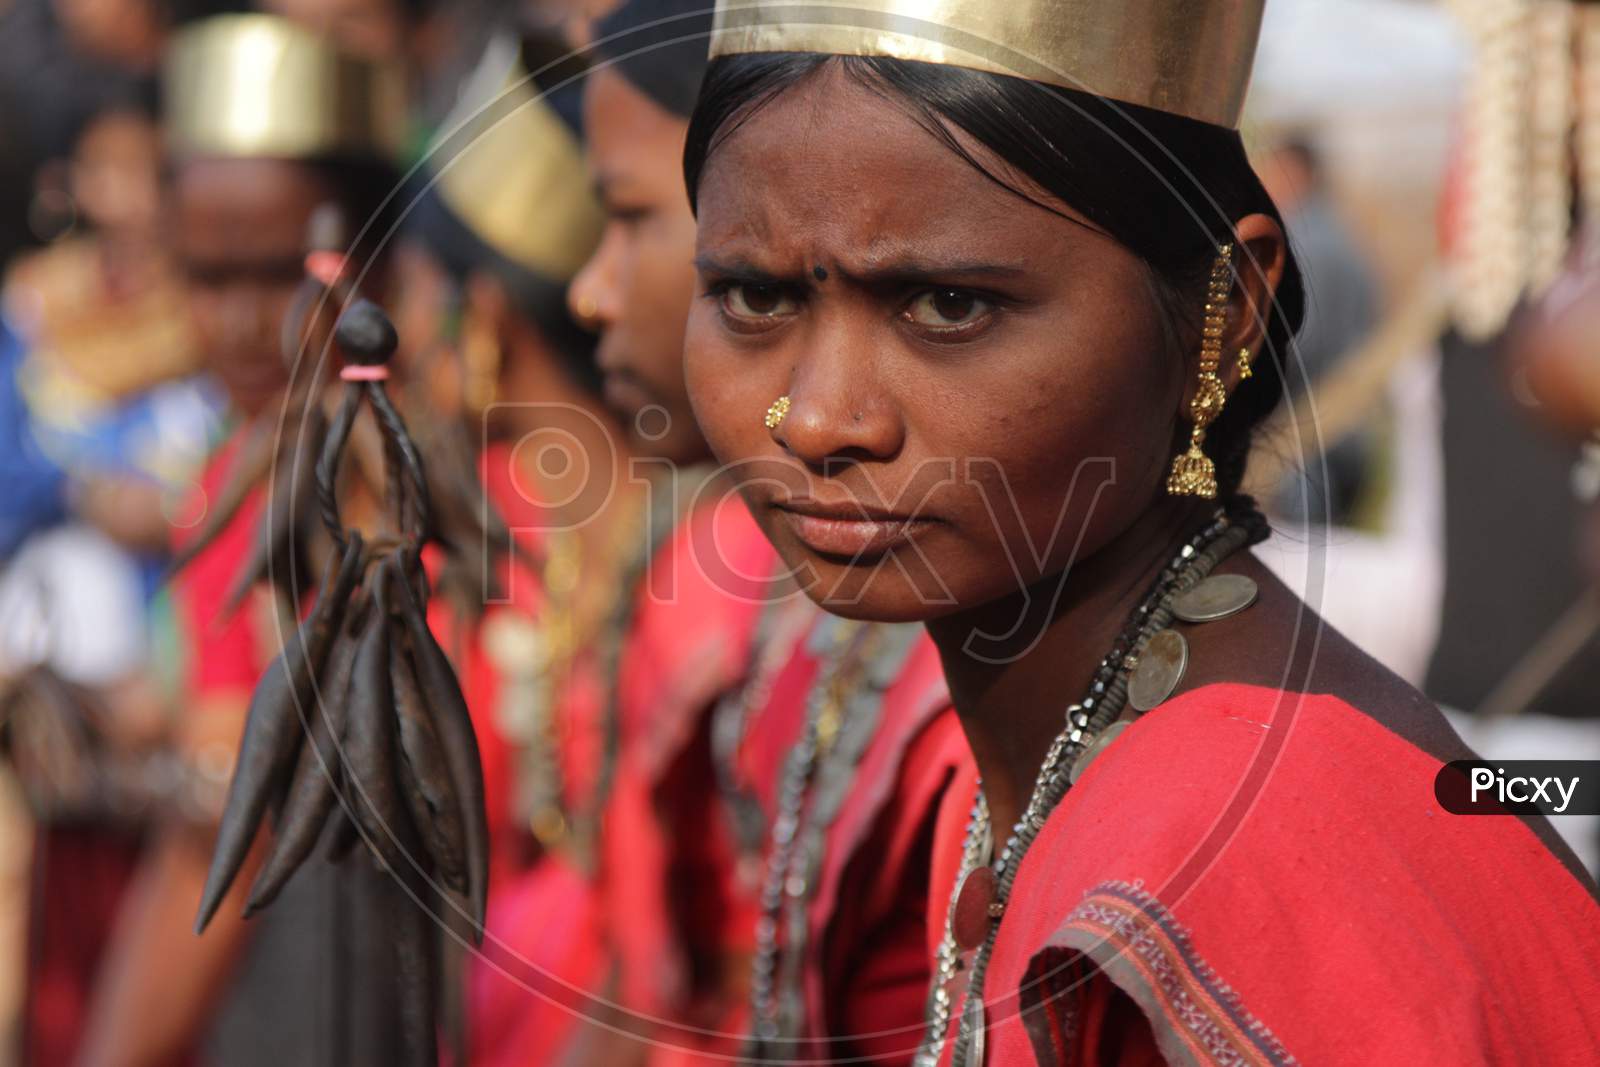 Rajasthani Woman in Traditional Attire at Shilpgram Fair, Udaipur, Rajasthan